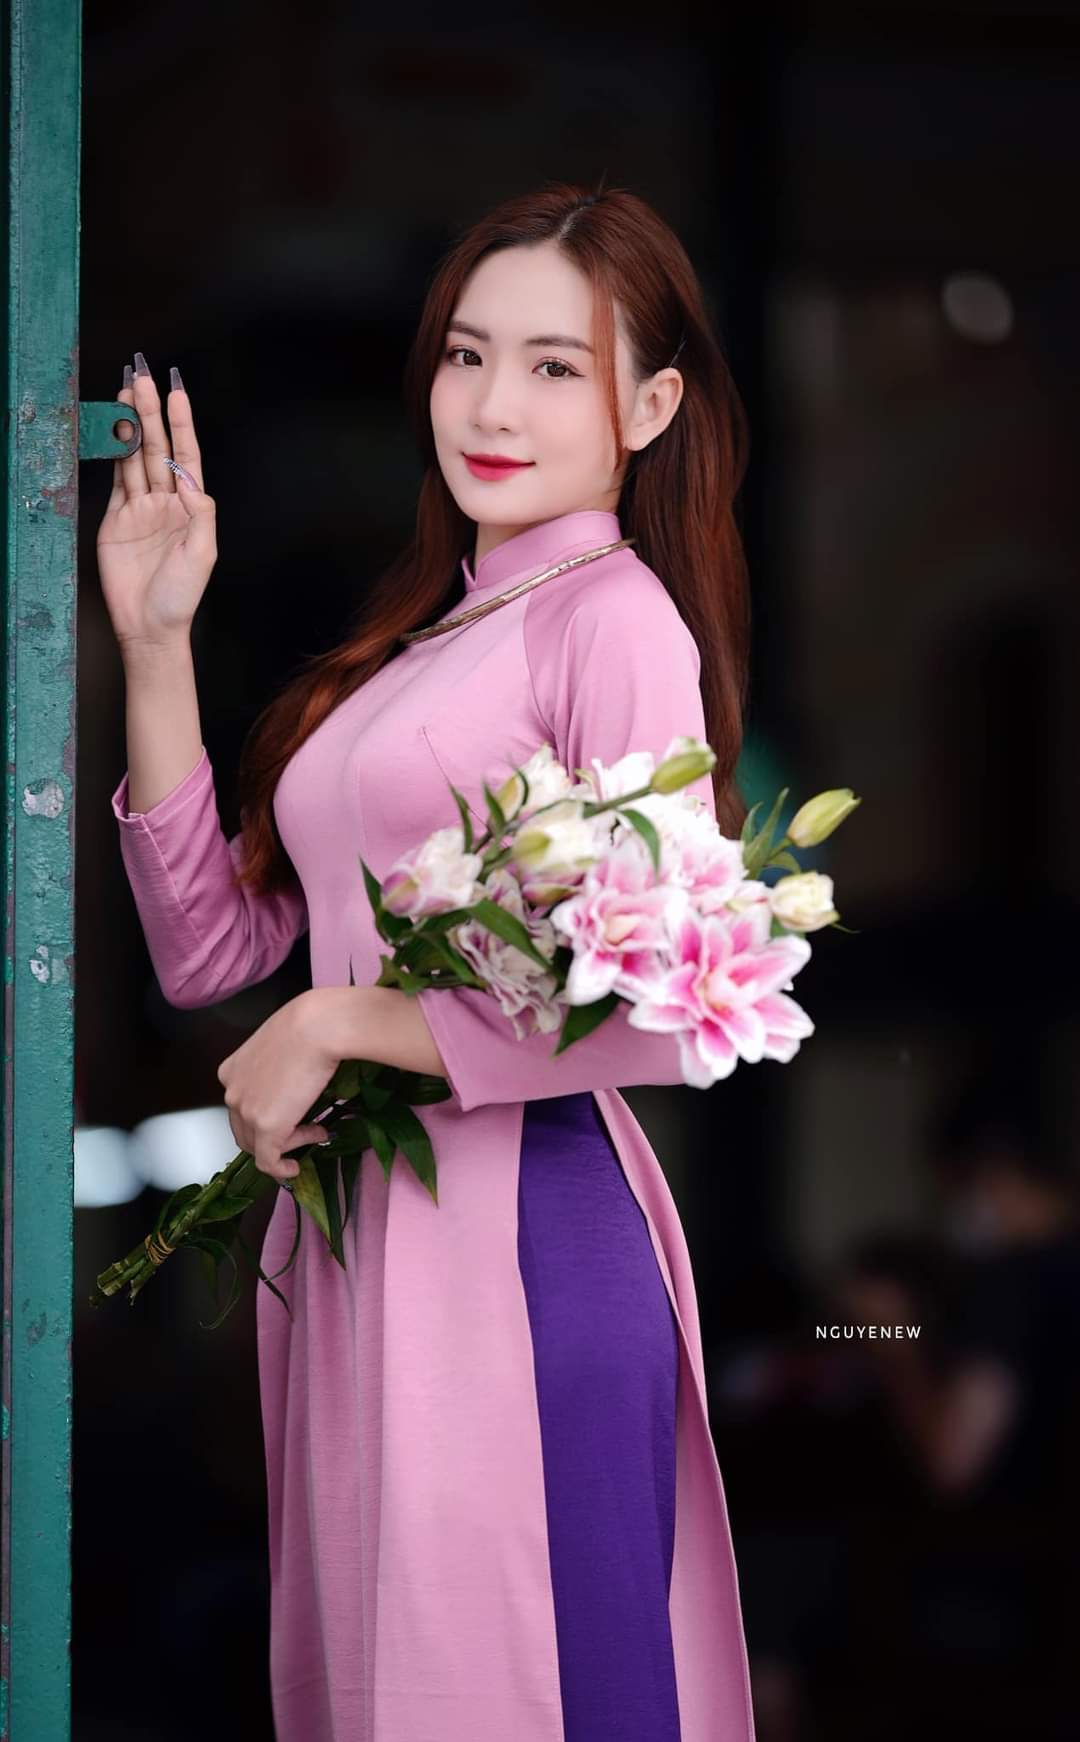 Pretty Vietnamese Girls 23.08.11.1 smooth